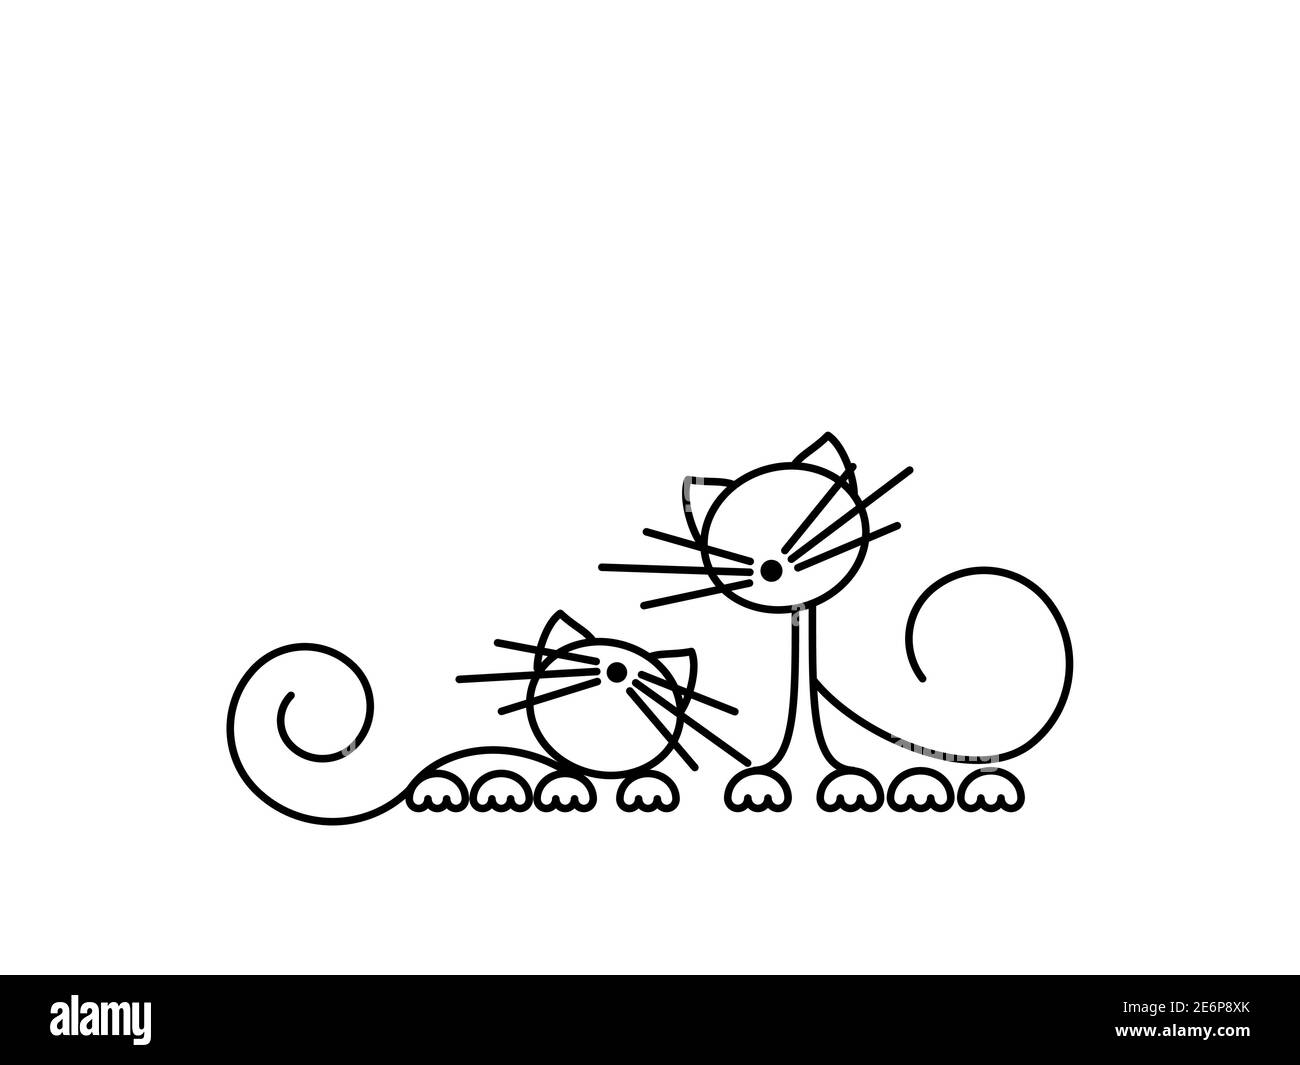 Happy Cats Silhouettes. Cat Print. Minimalist Art. Vector illustration. Stock Vector